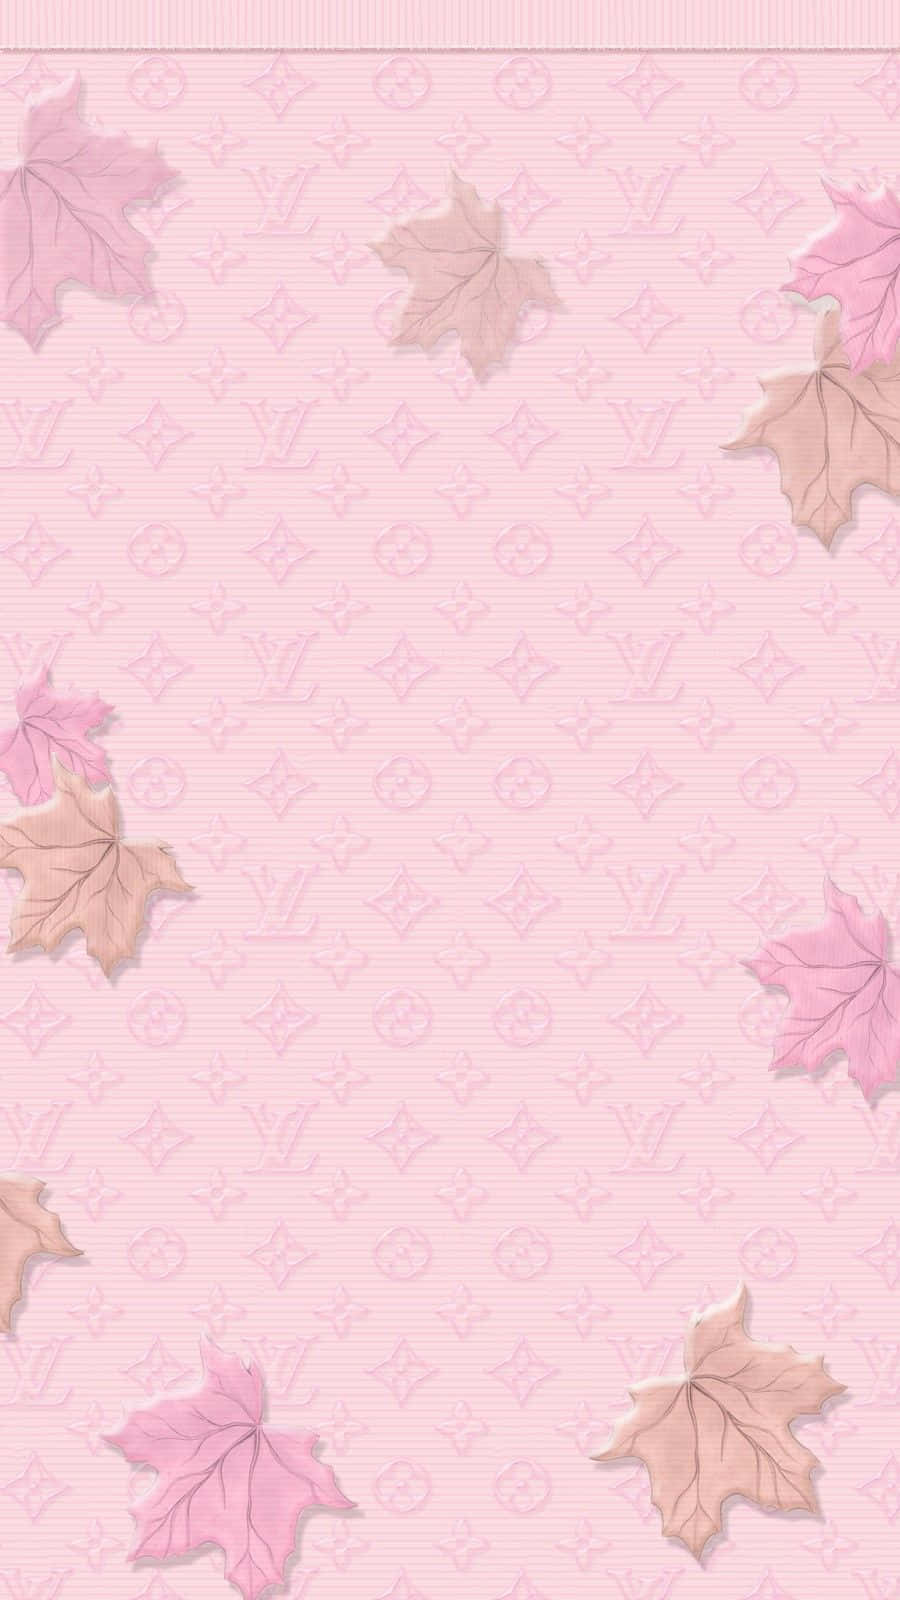 614216 Autumn Background Pink Images Stock Photos  Vectors  Shutterstock